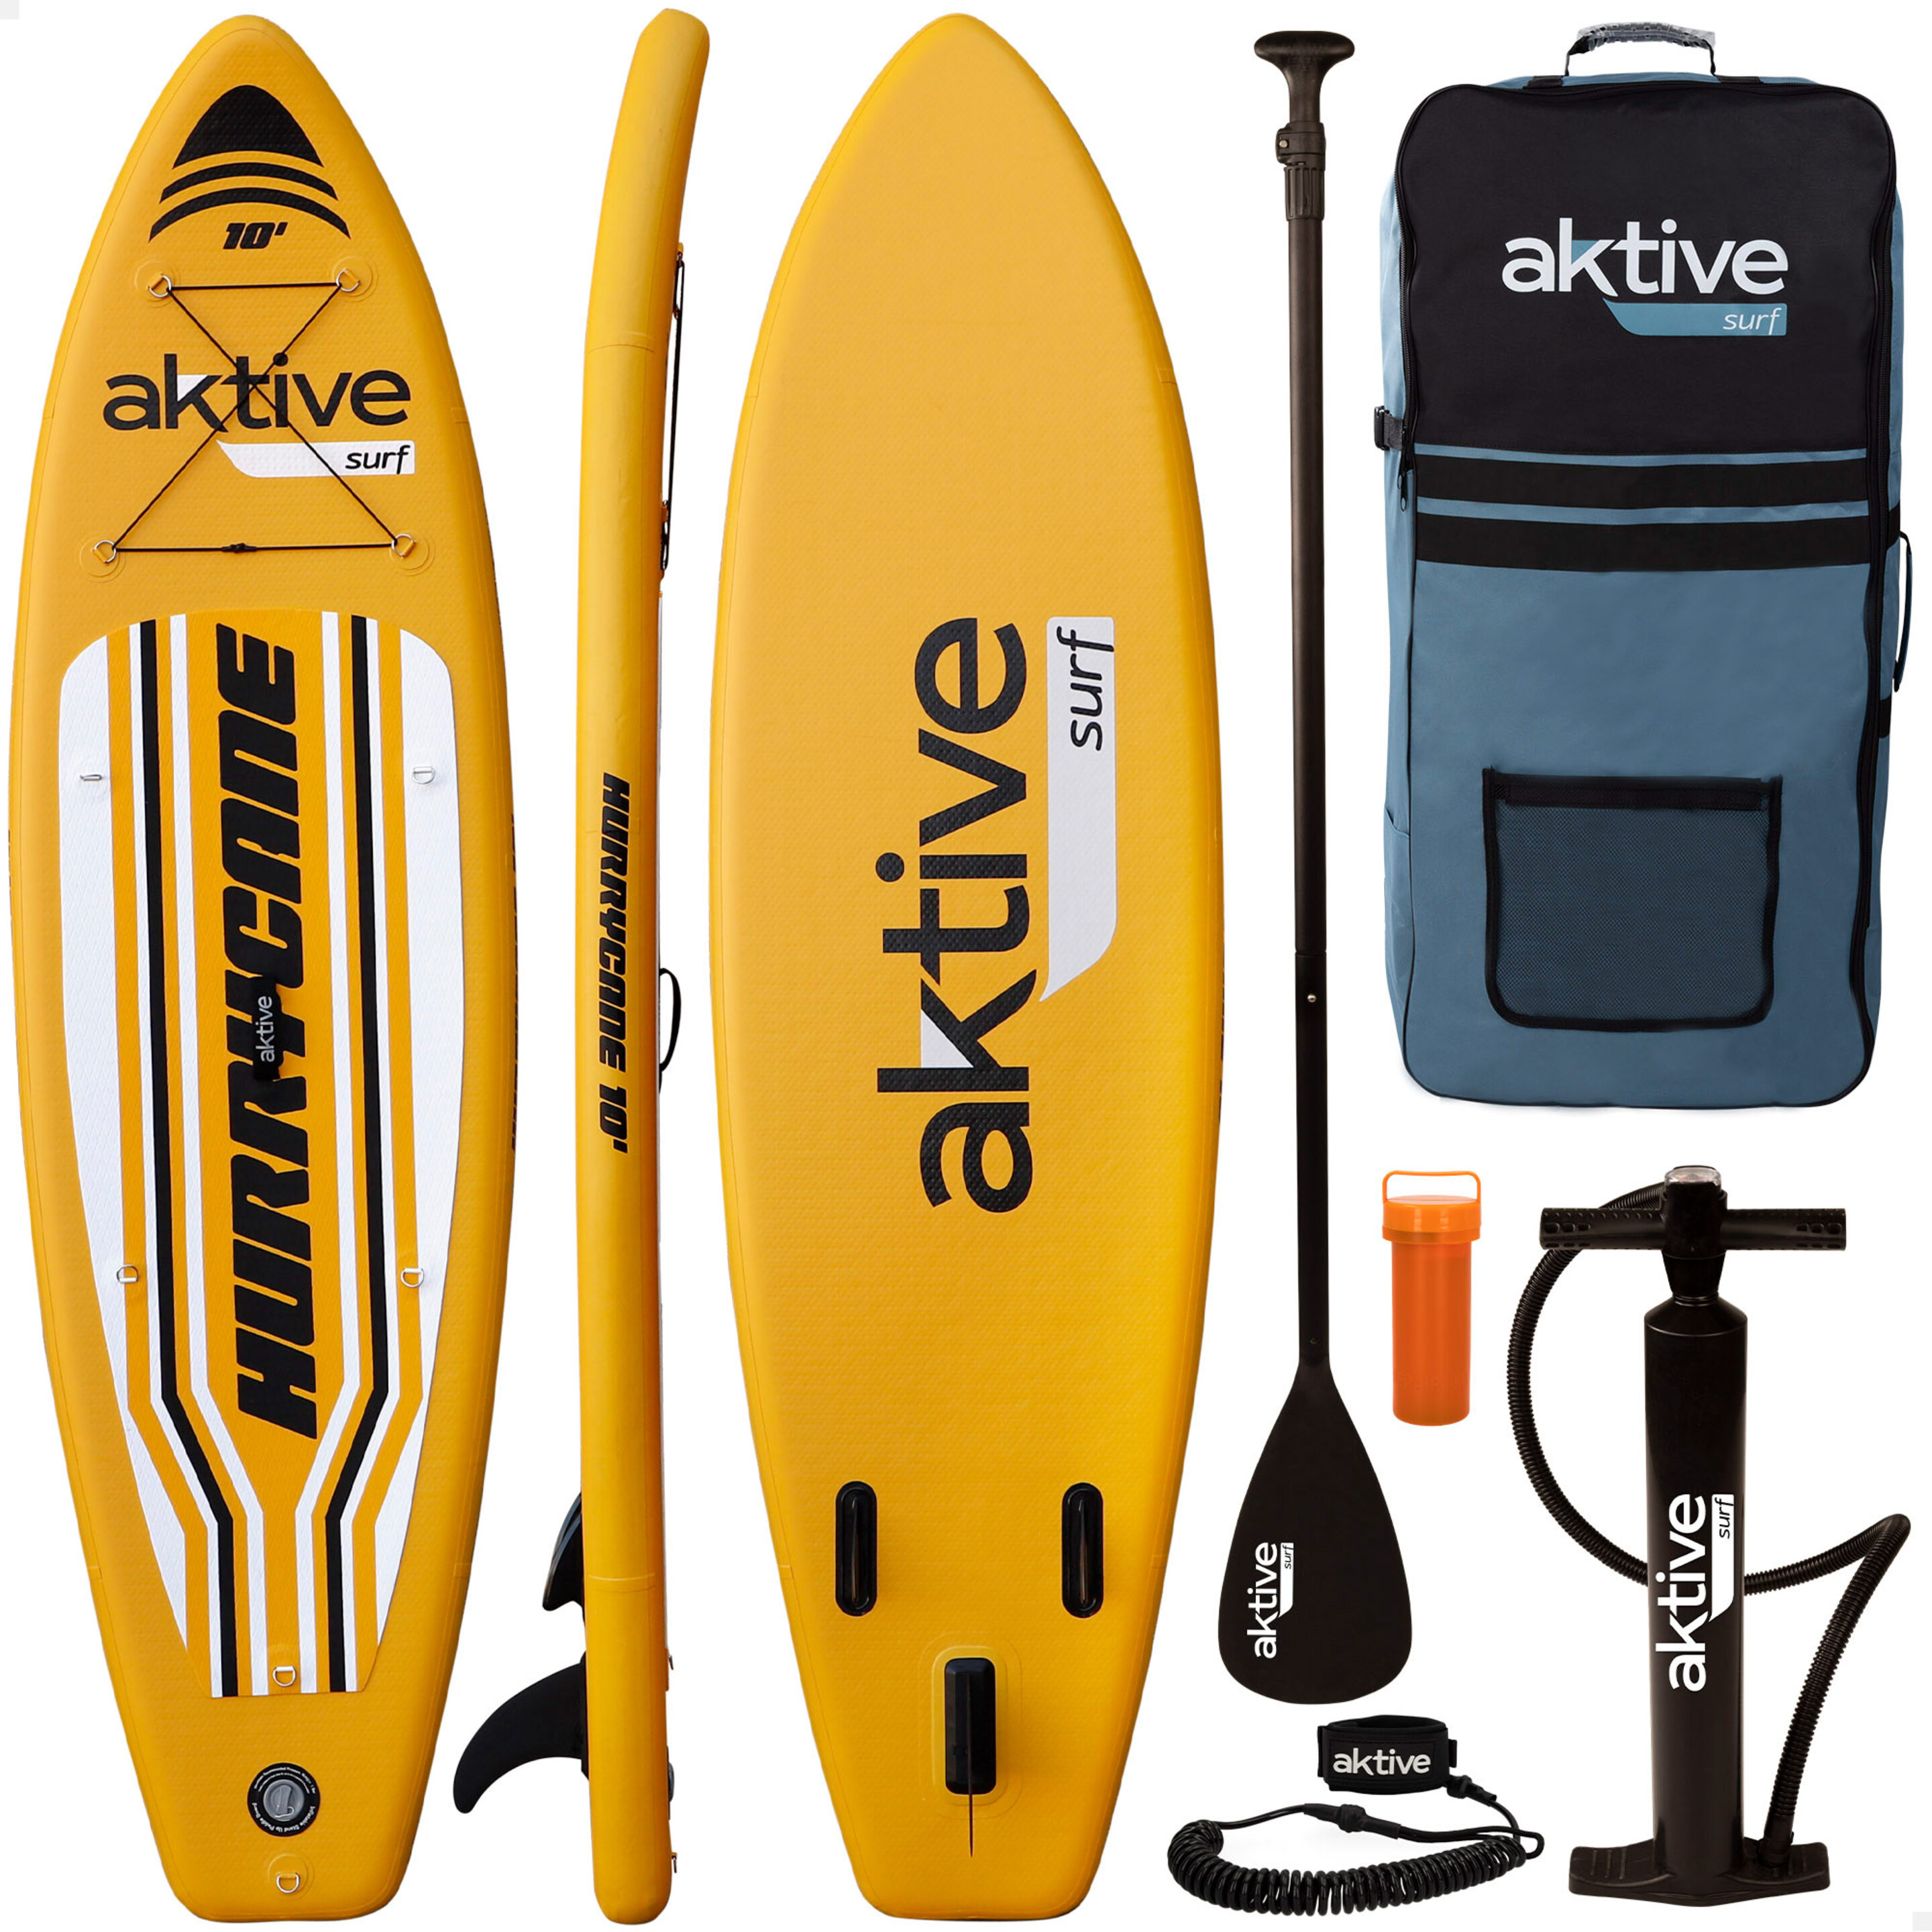 Tabla Paddle Surf Hinchable Nivel Avanzado 10' Aktive - amarillo - 